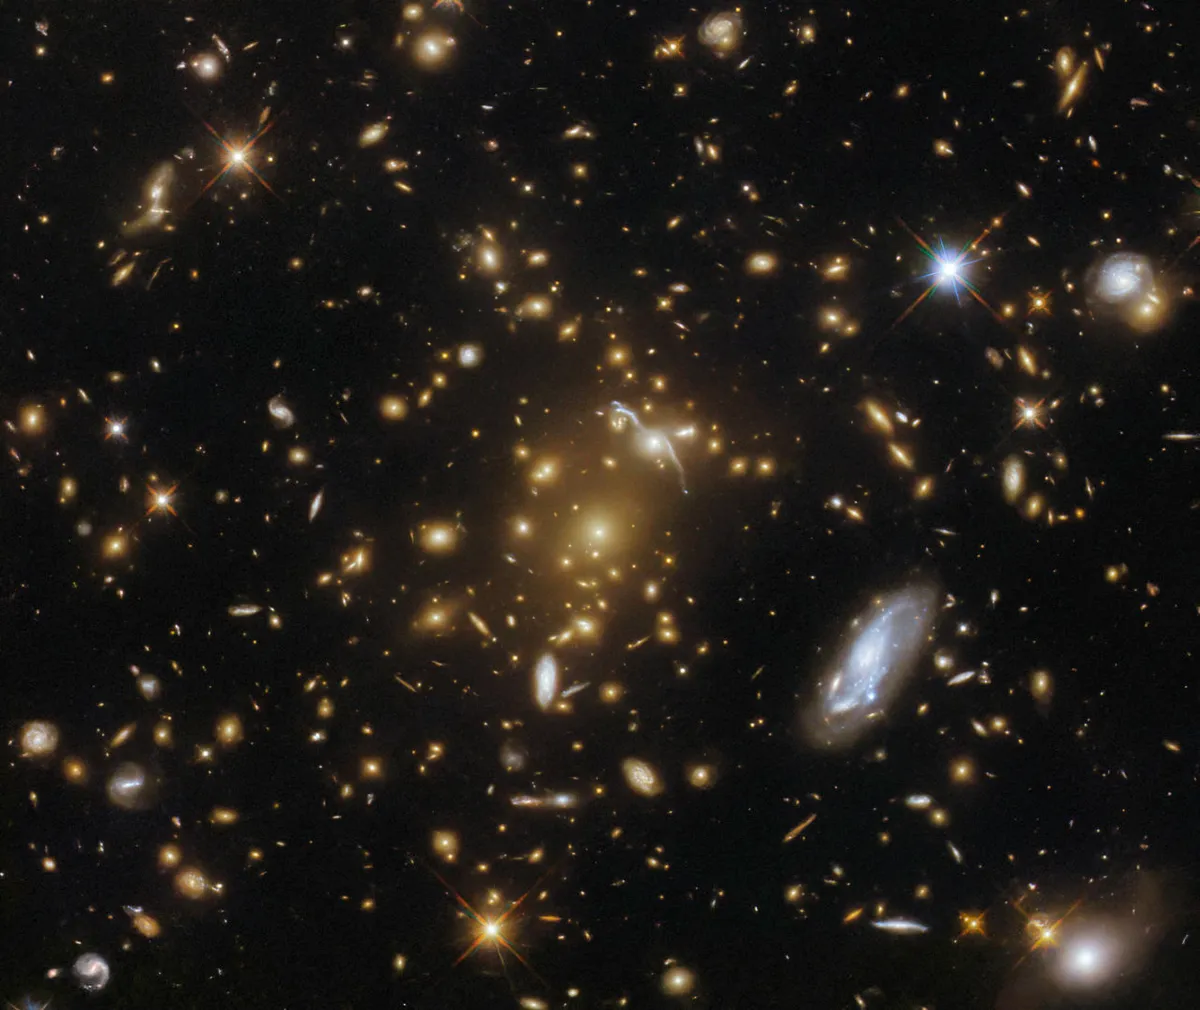 MACS J1823.1 7822 Hubble Space Telescope, 8 May 2023 Credit: ESA/Hubble & NASA, H. Ebeling 